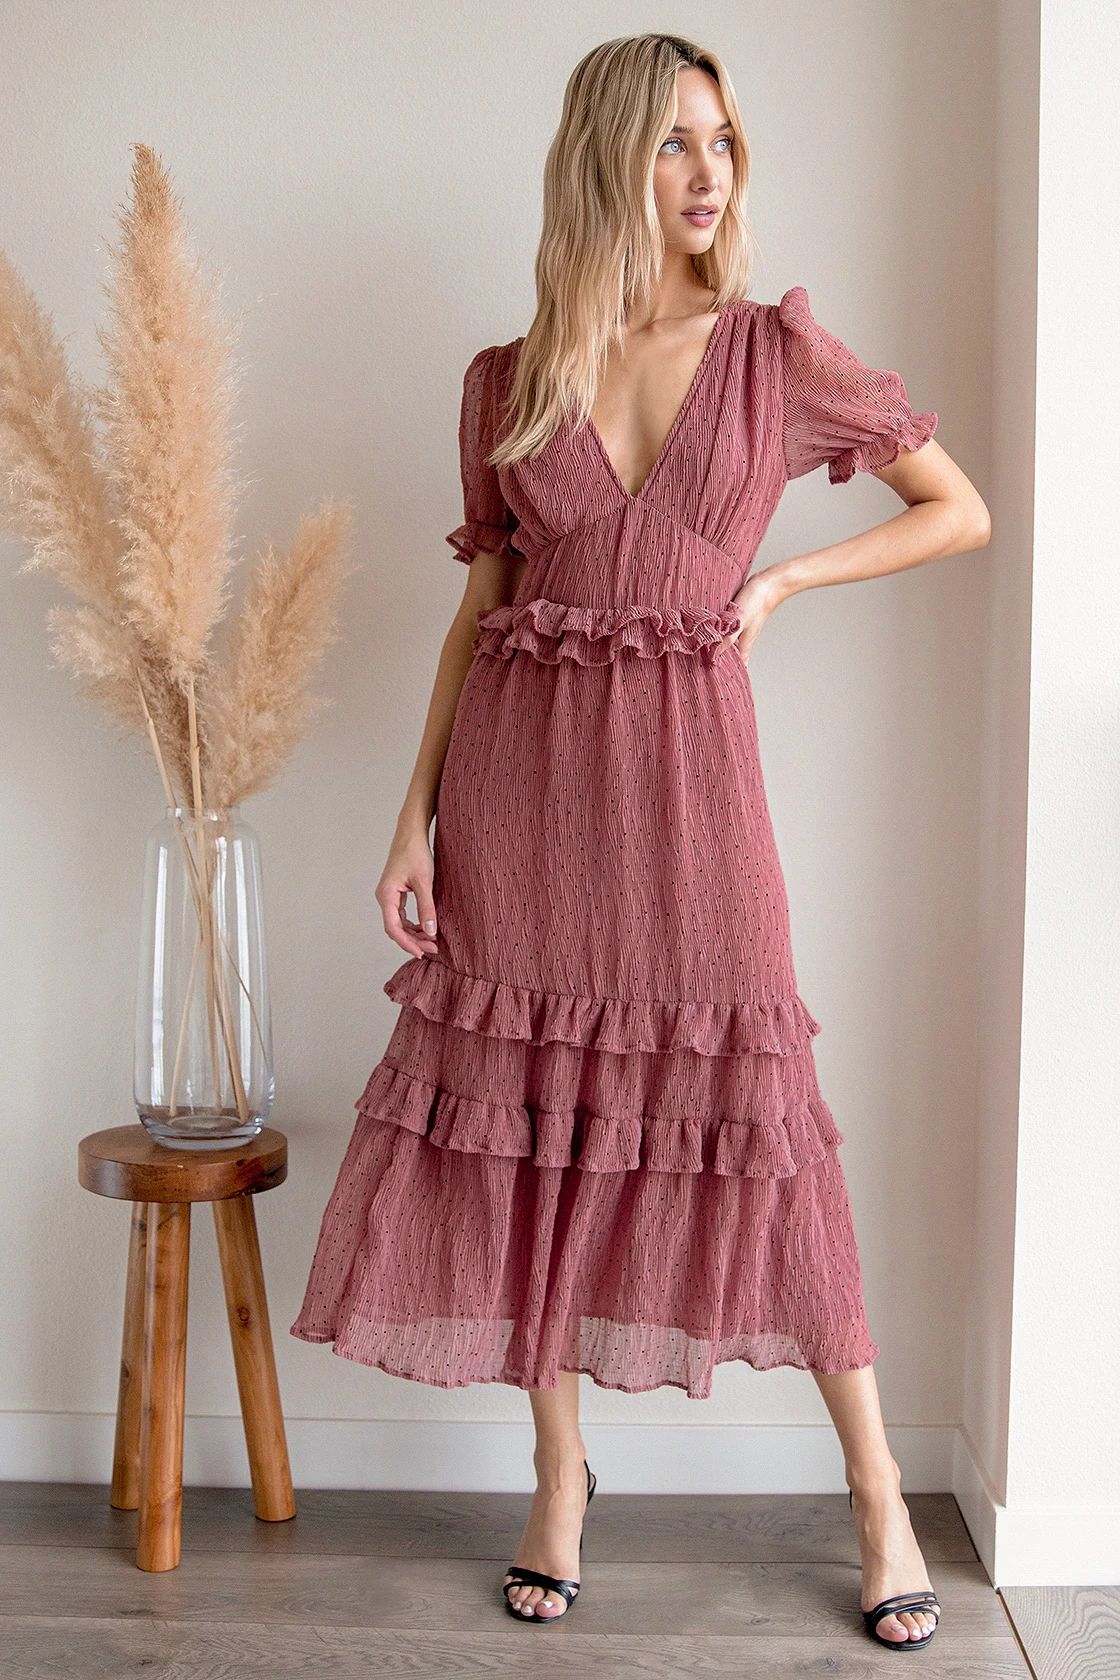 Know Your Heart Rose Pink Polka Dot Ruffled Midi Dress | Lulus (US)